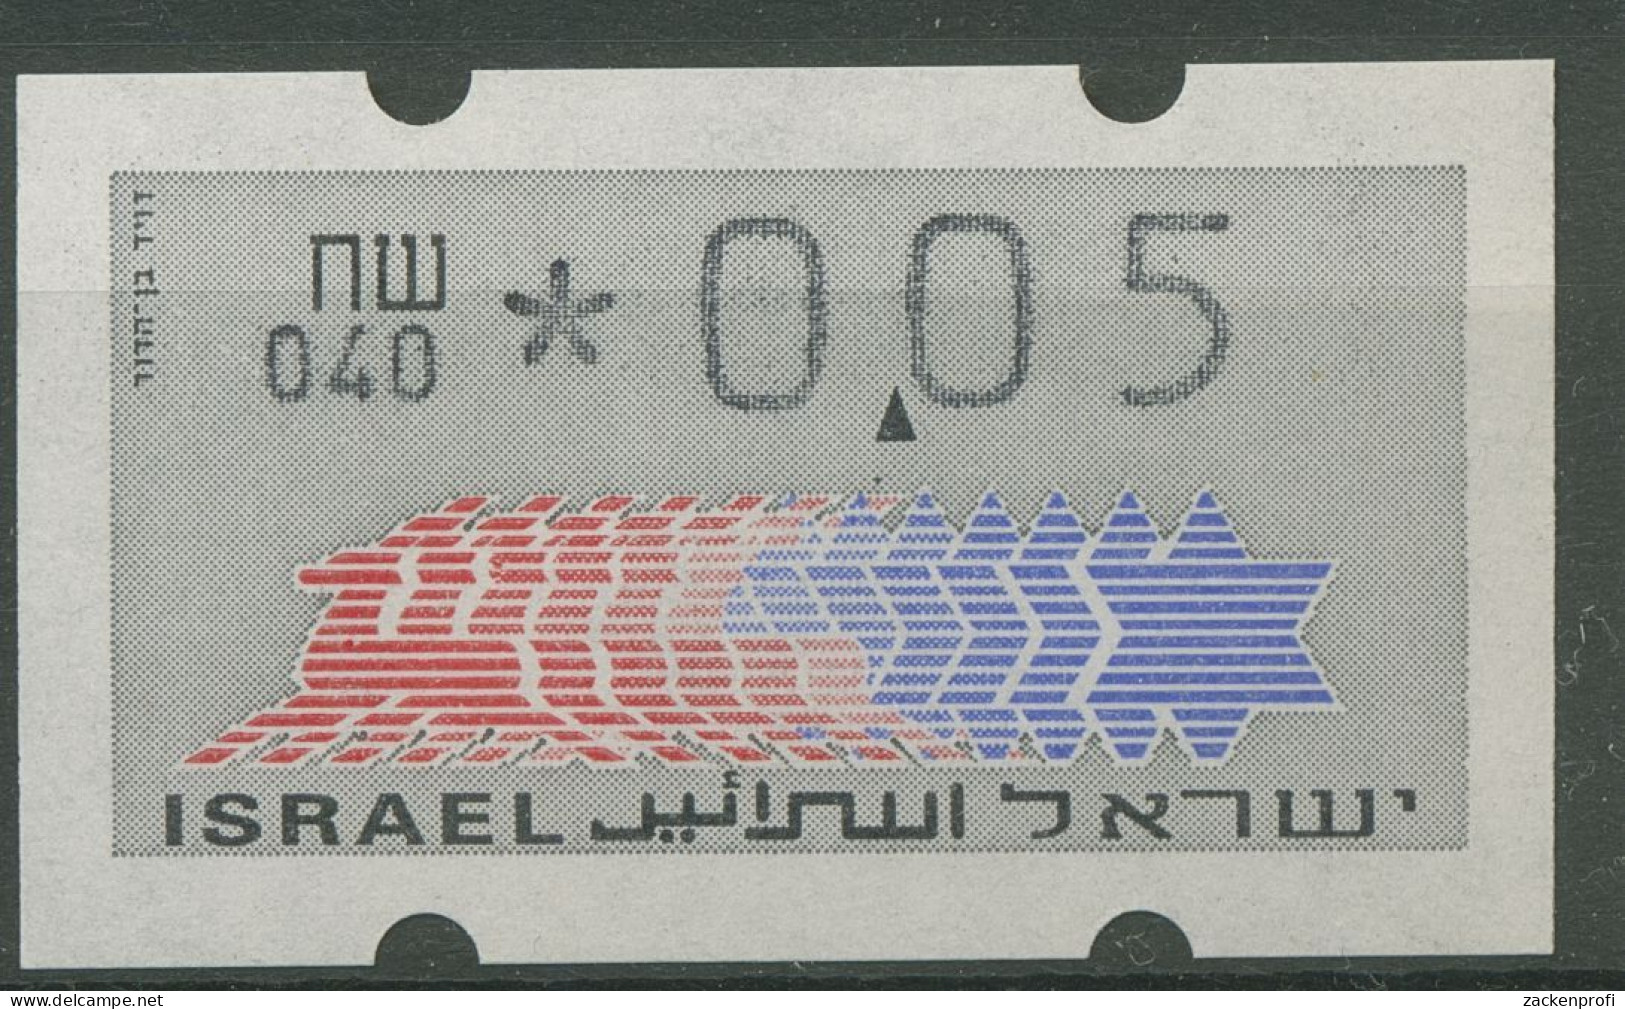 Israel ATM 1990 Hirsch Automat 040 Einzelwert ATM 3.3.40 Postfrisch - Franking Labels